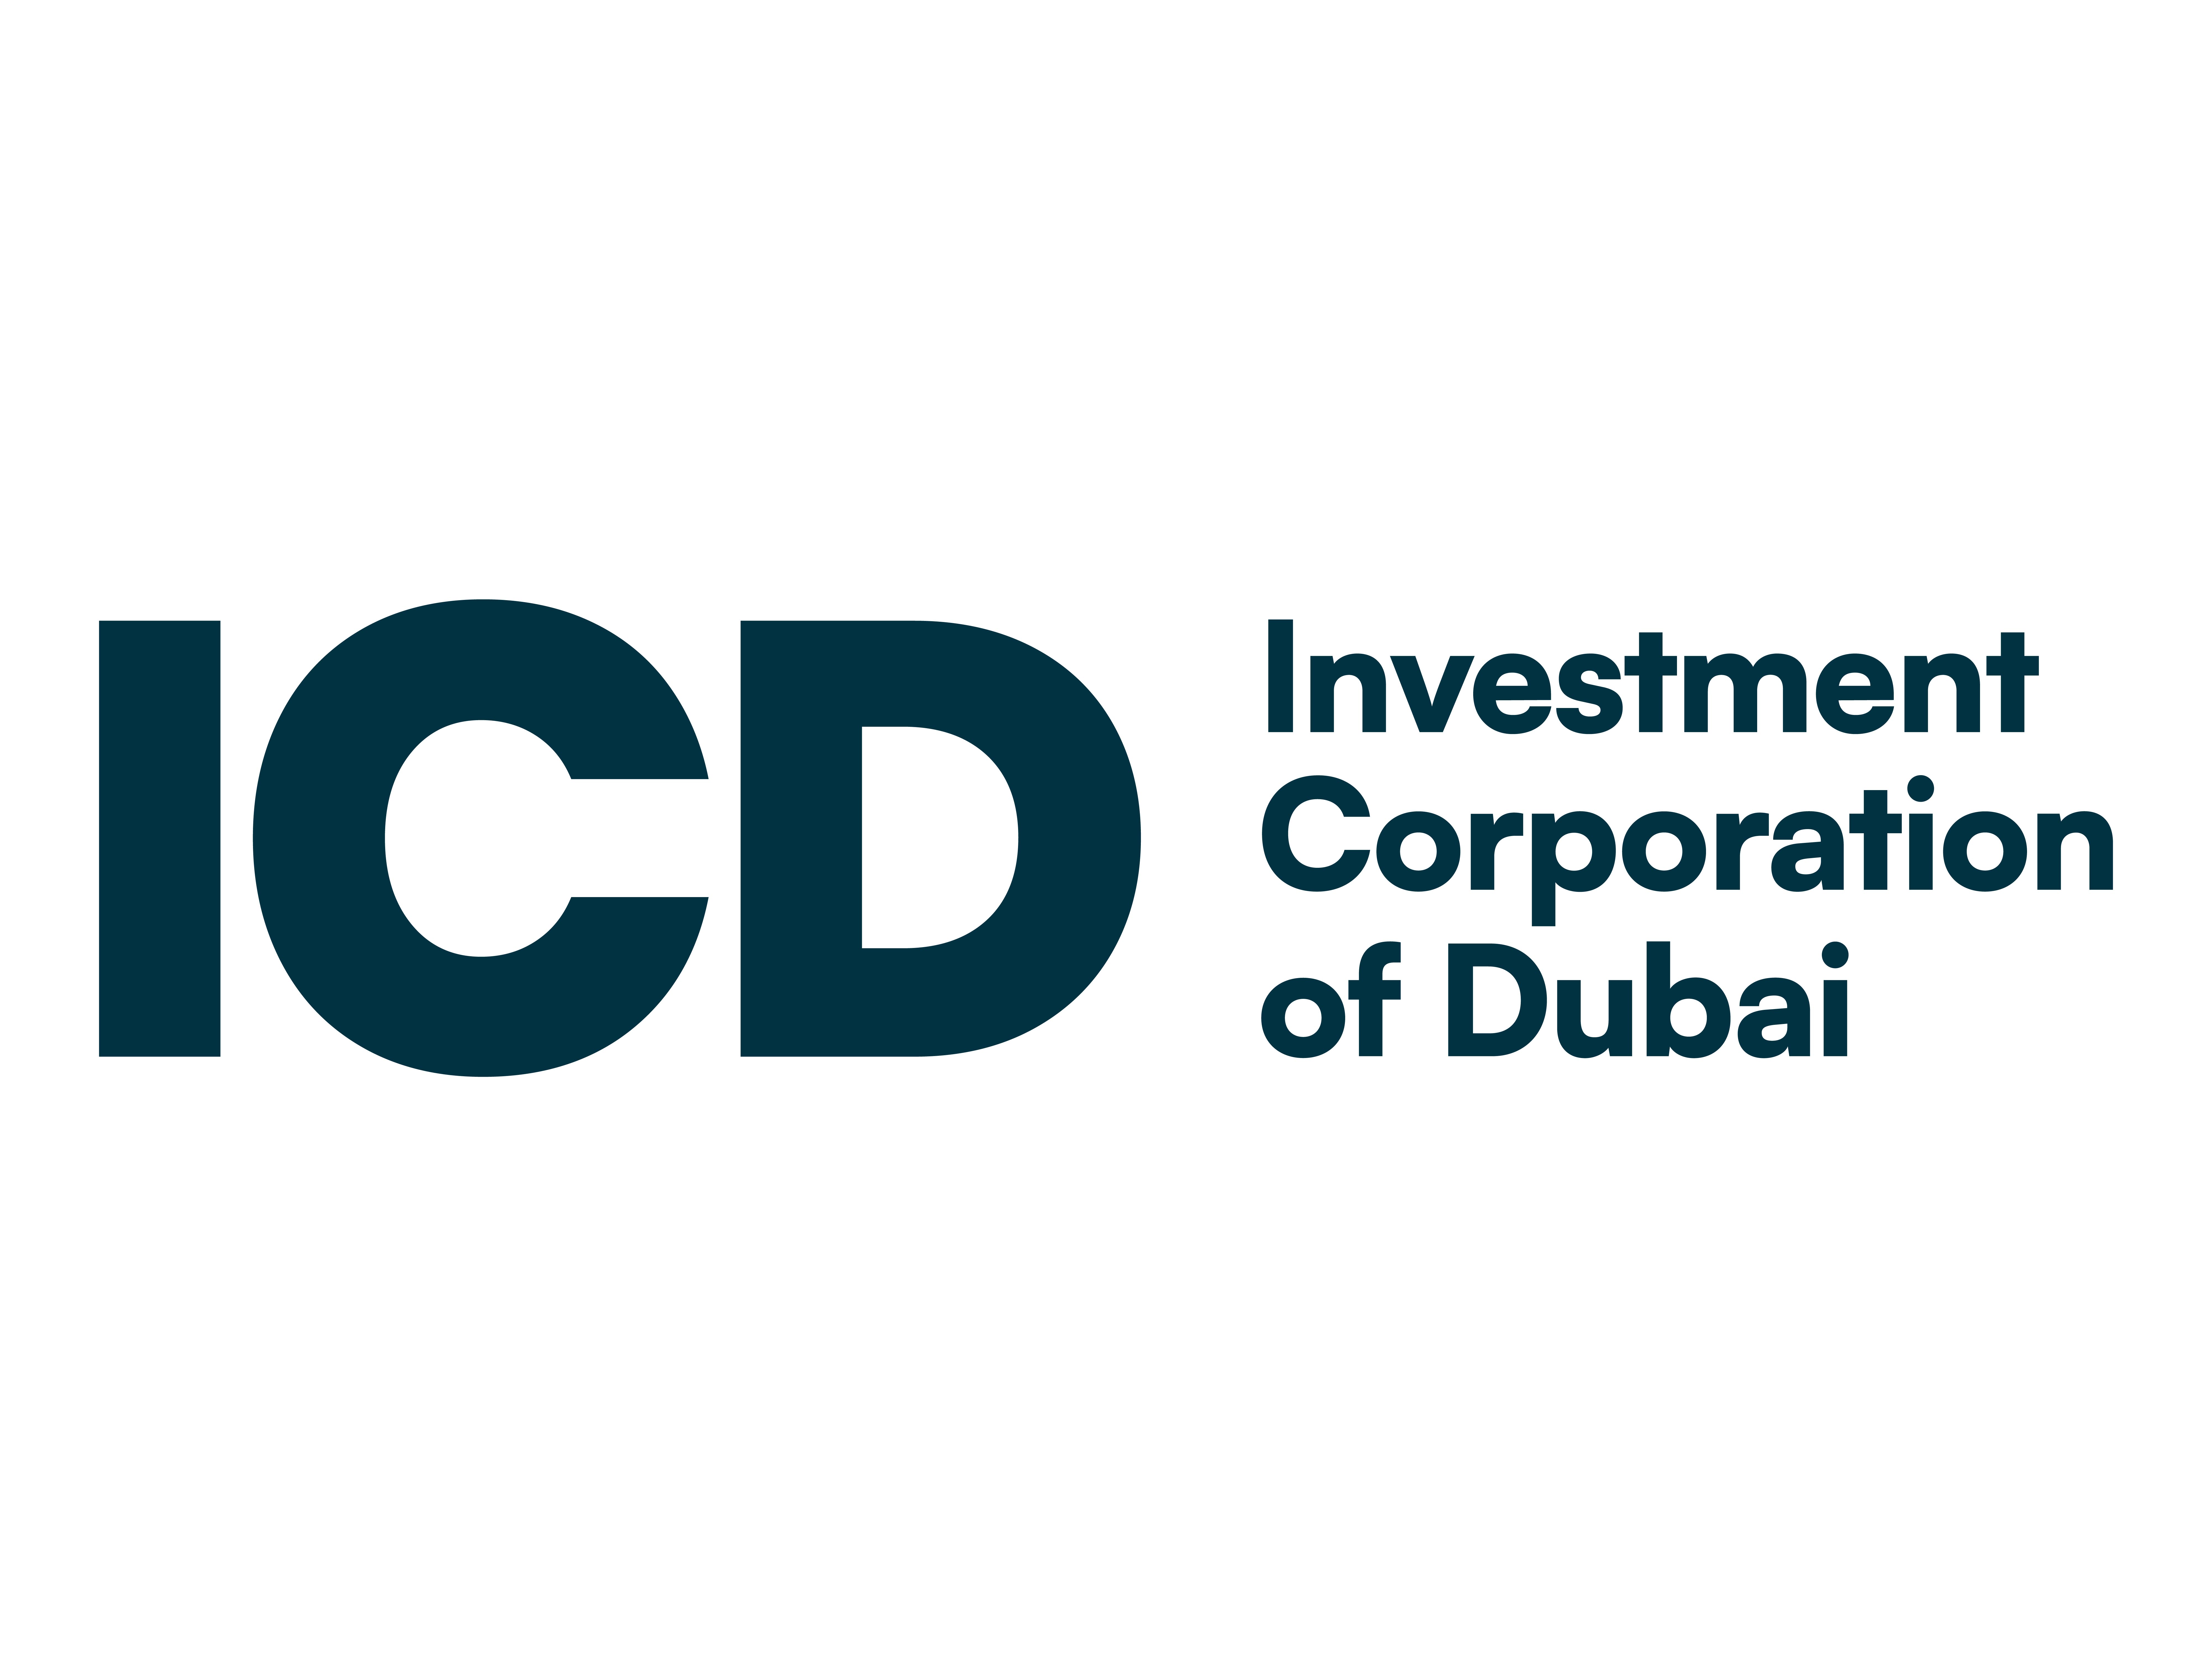 Investment Corporation of Dubai unveils new identity